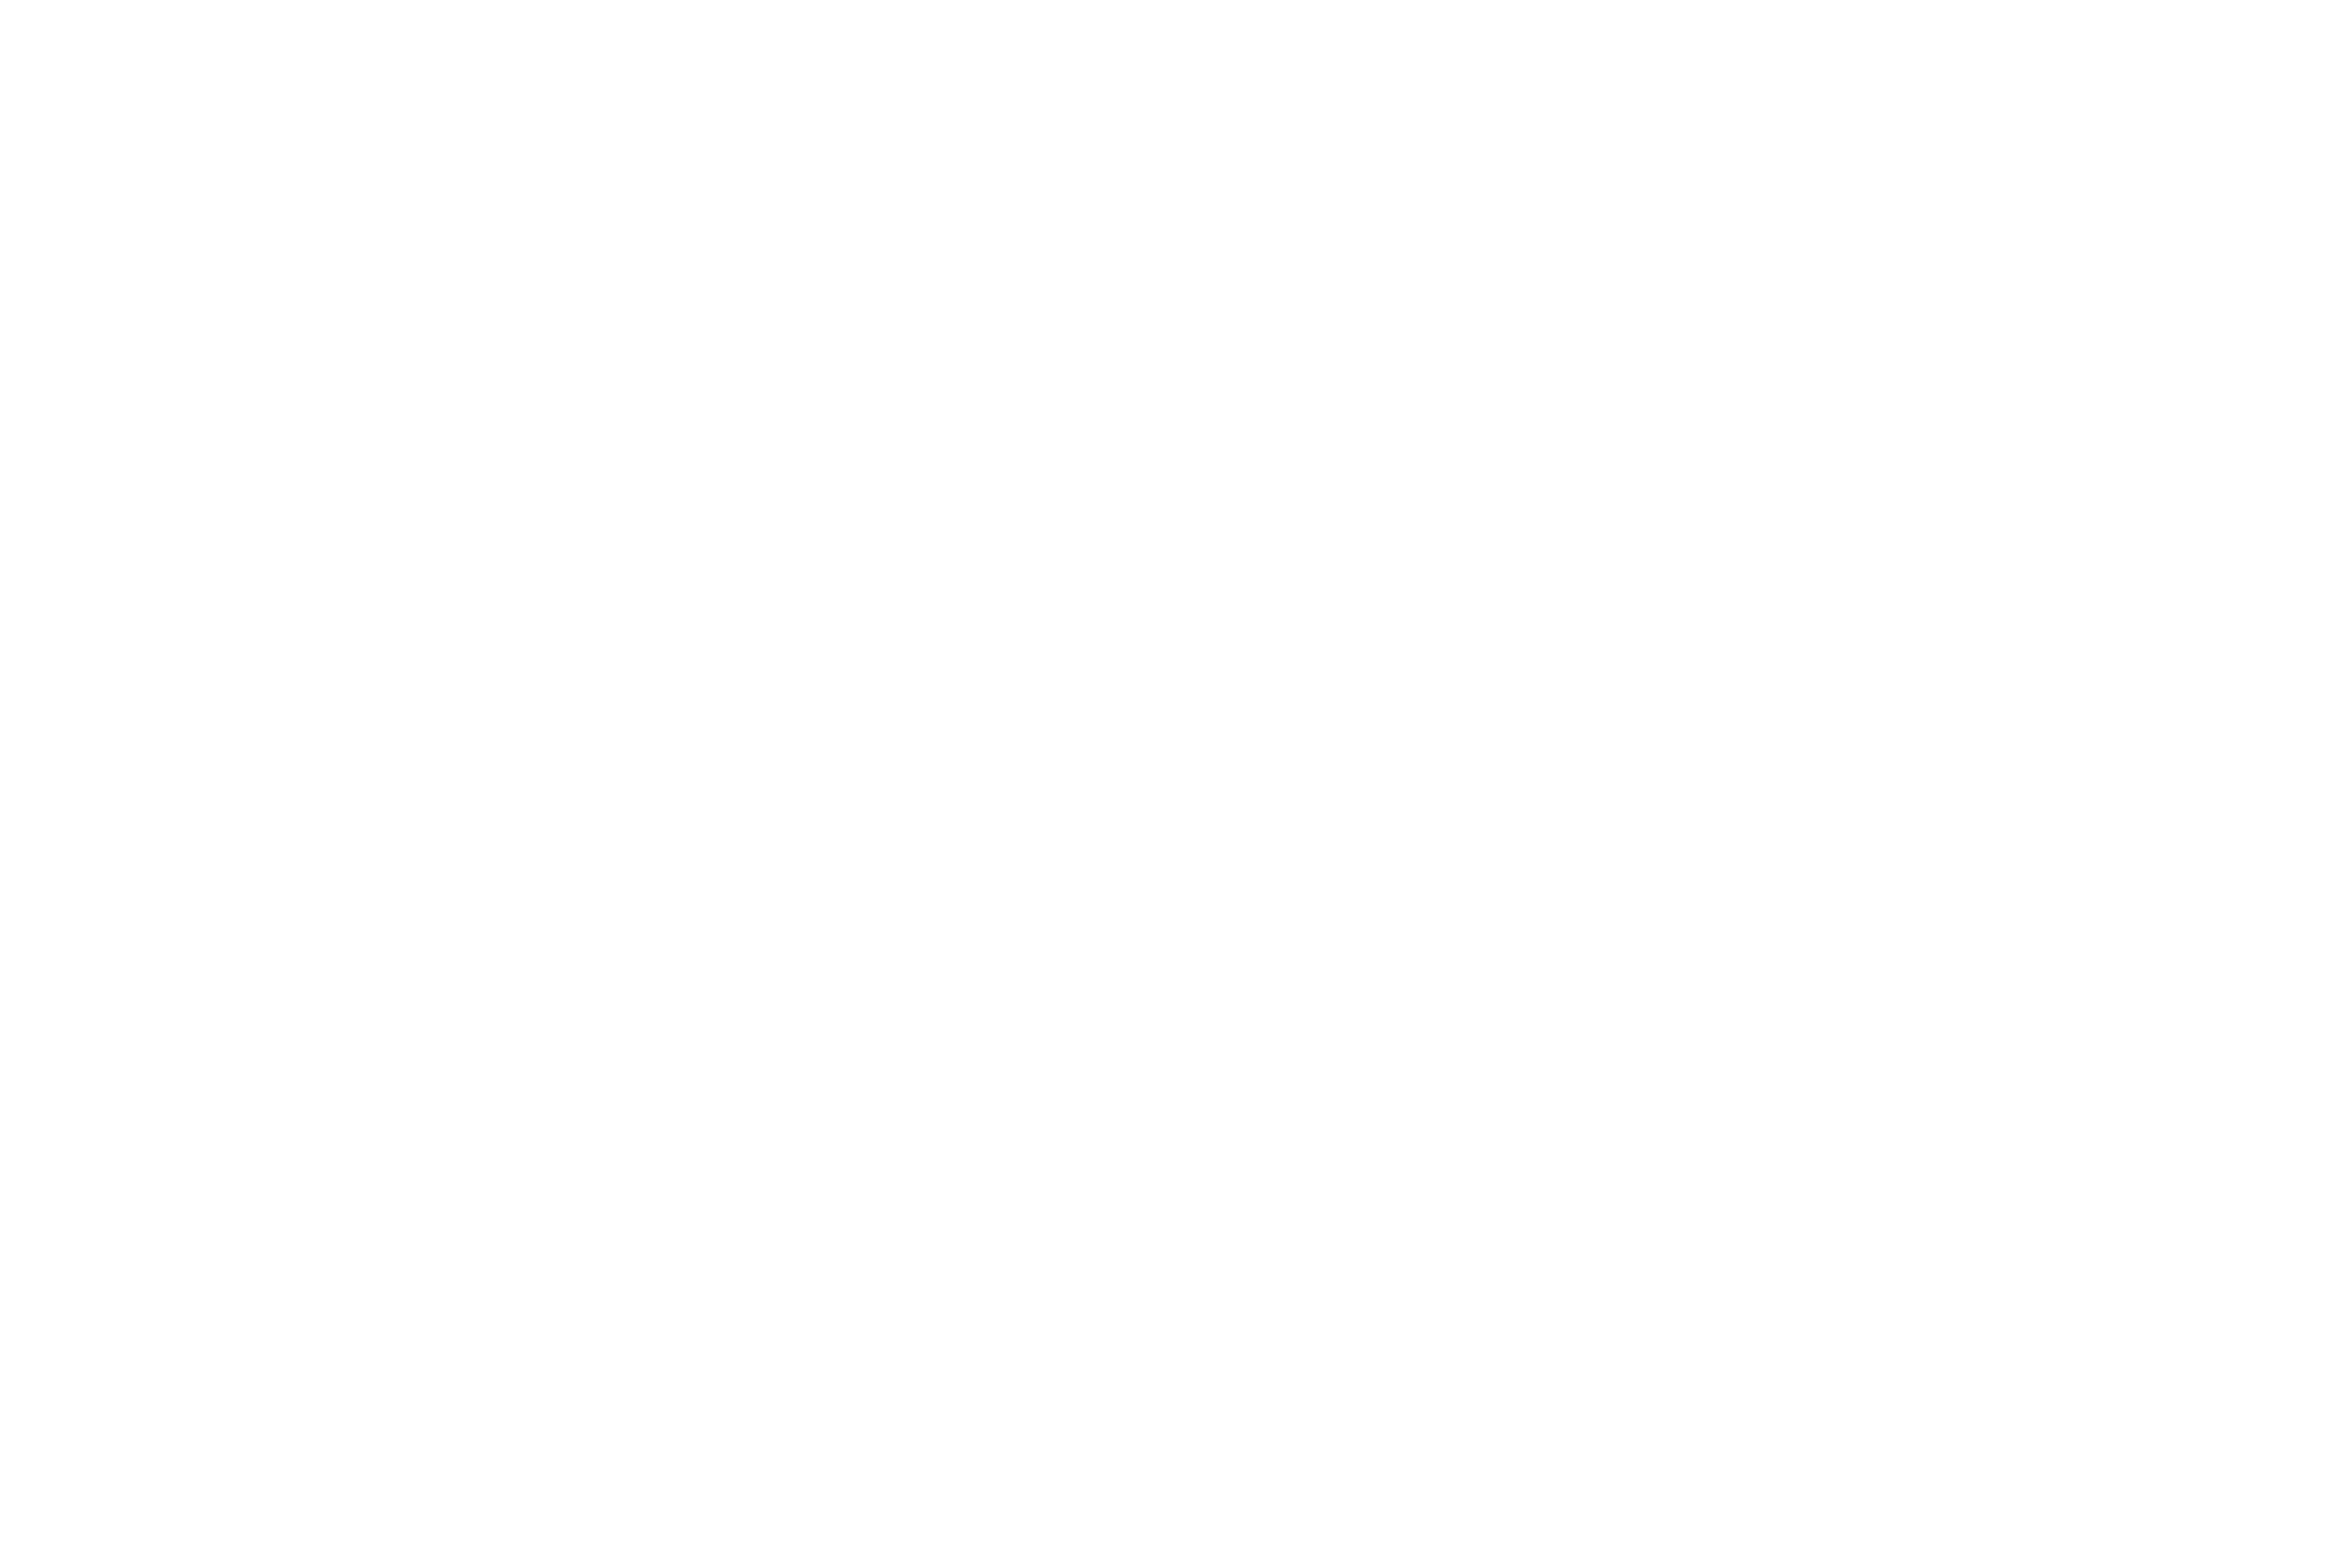 Steve Hood Films